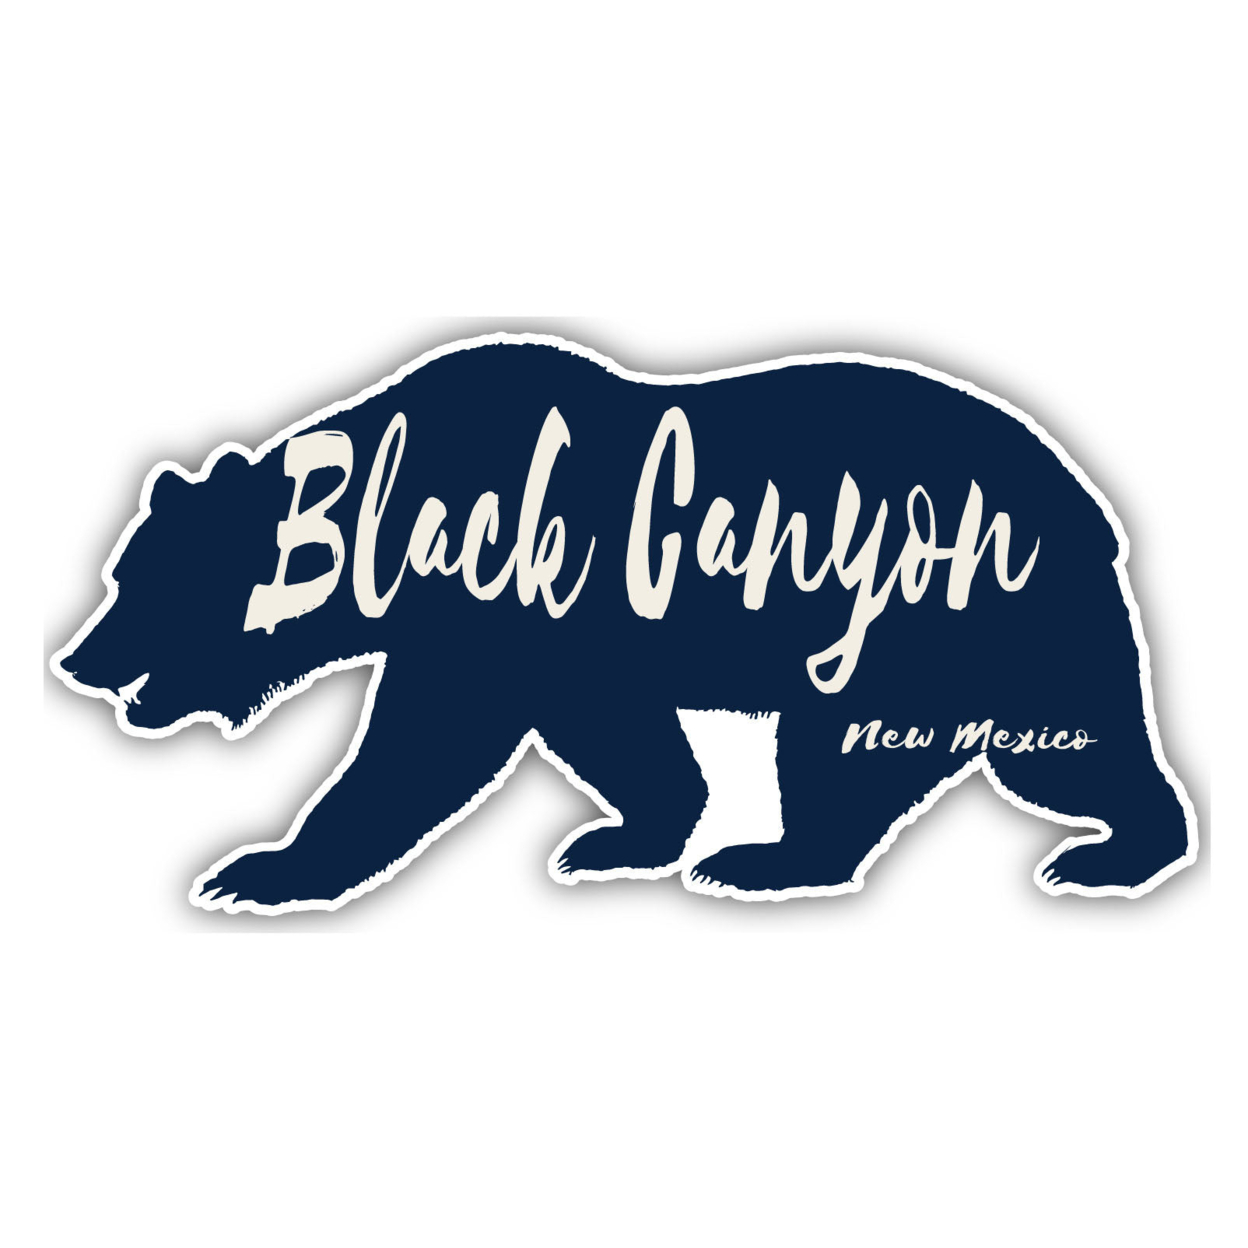 Black Canyon New Mexico Souvenir Decorative Stickers (Choose Theme And Size) - Single Unit, 2-Inch, Bear